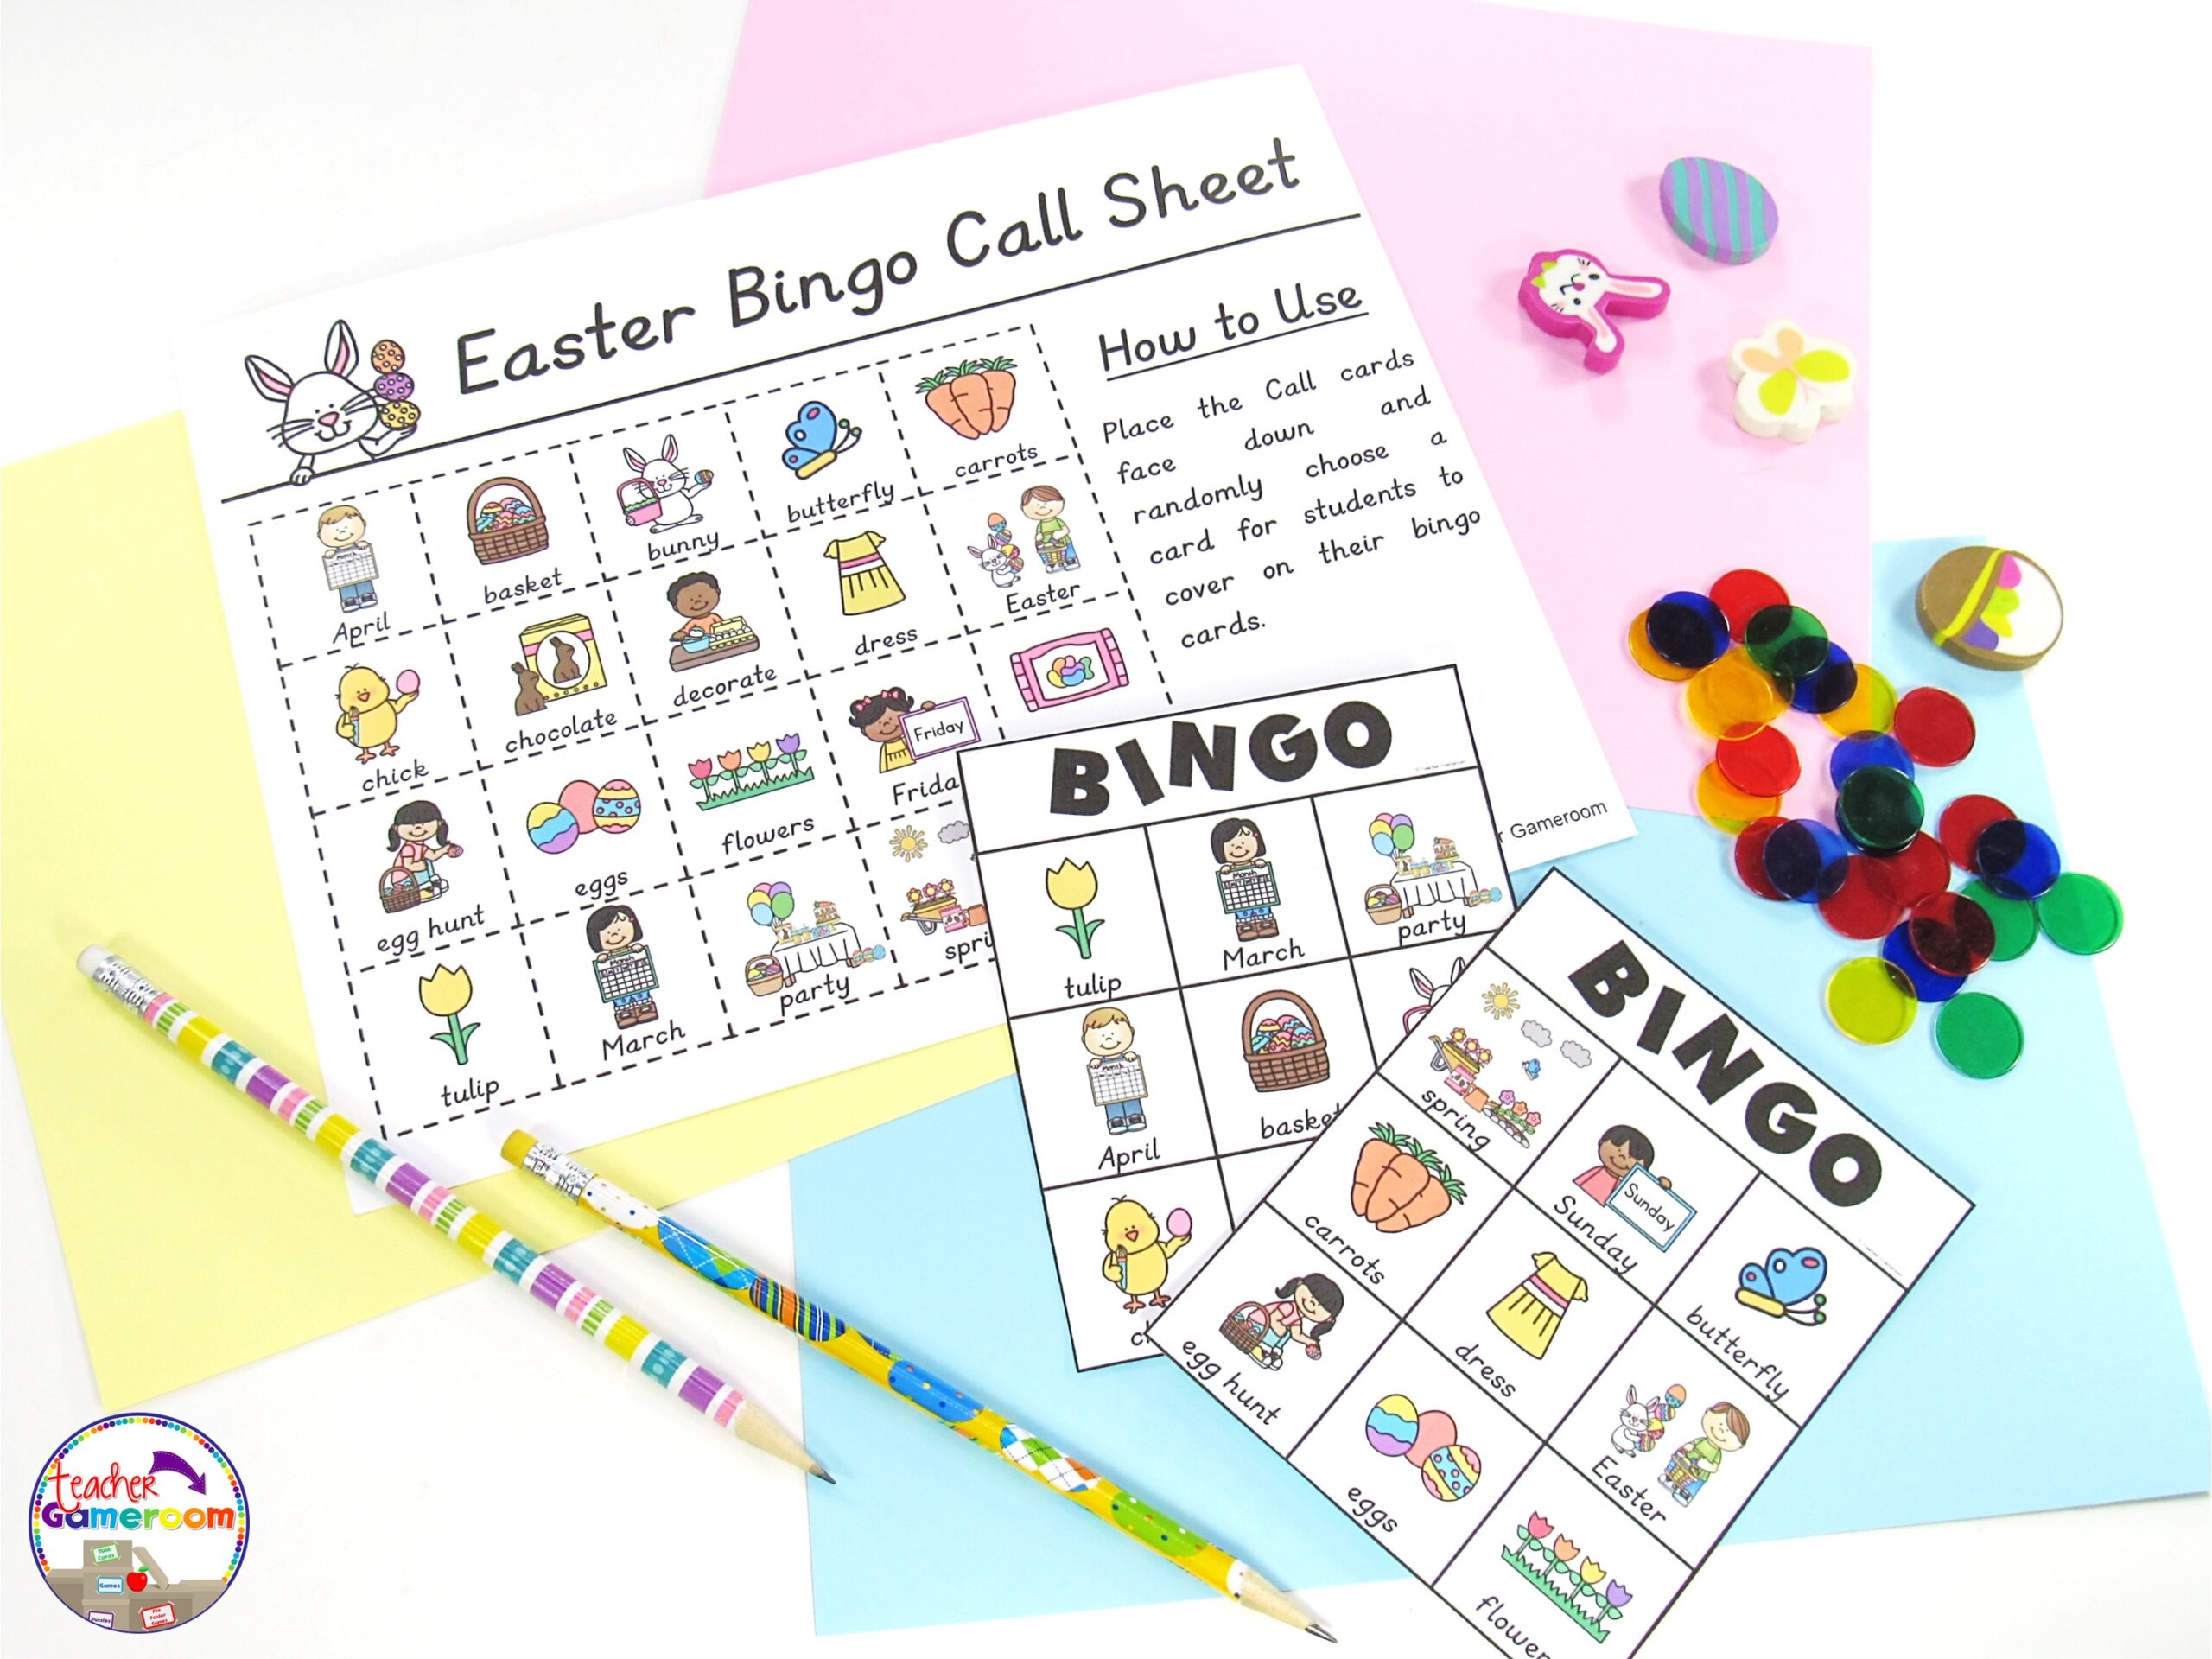 Easter Bingo Call sheet with 2 Bingo cards